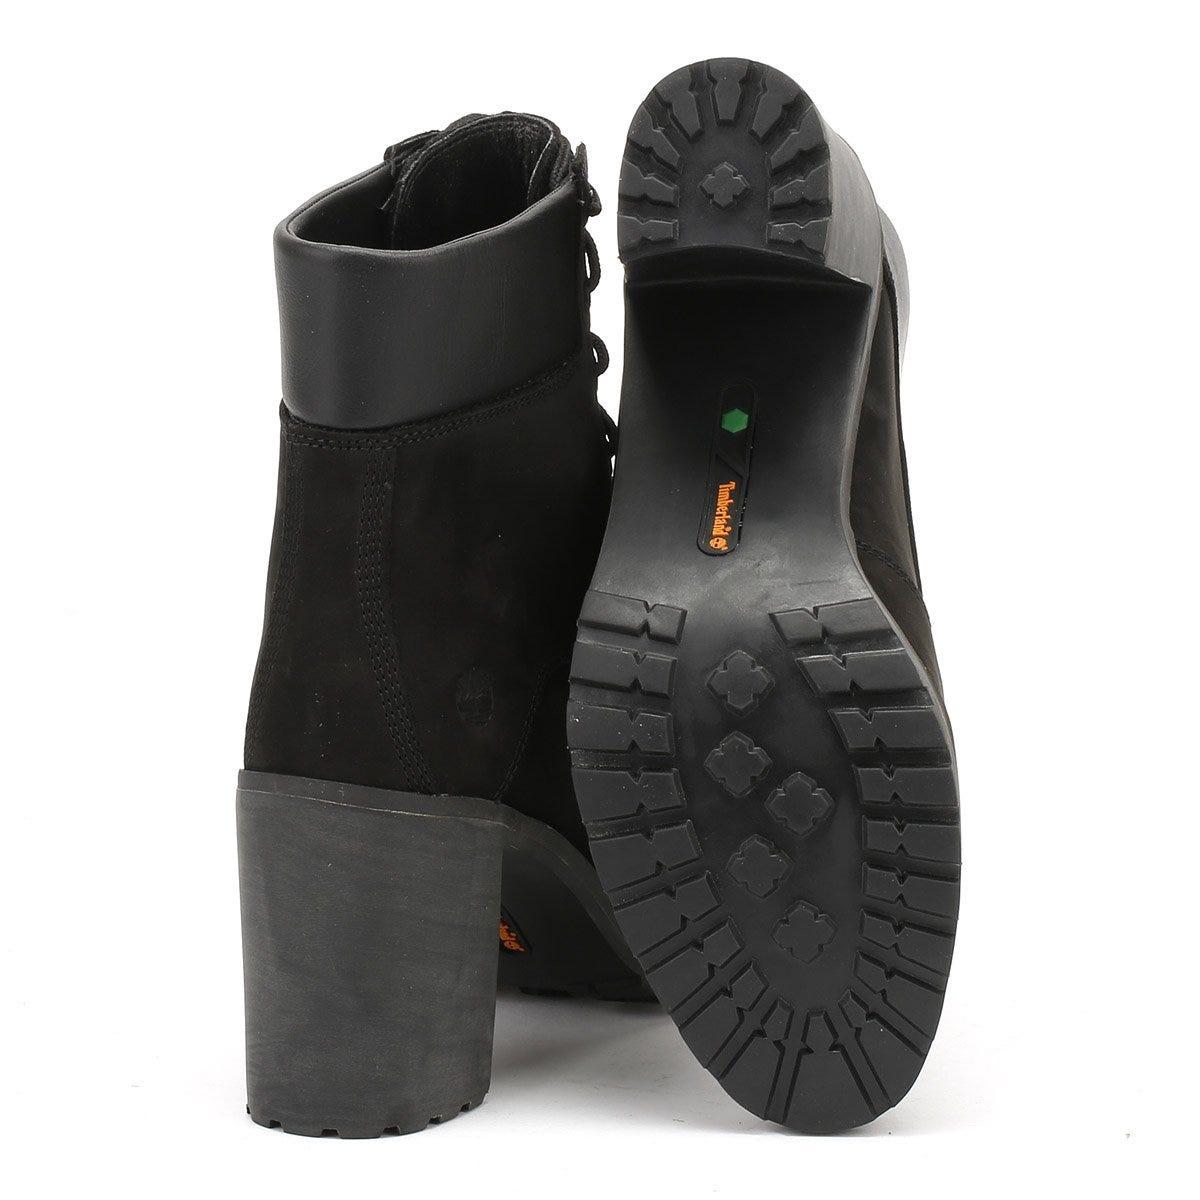 allington 6 inch boot for women in black